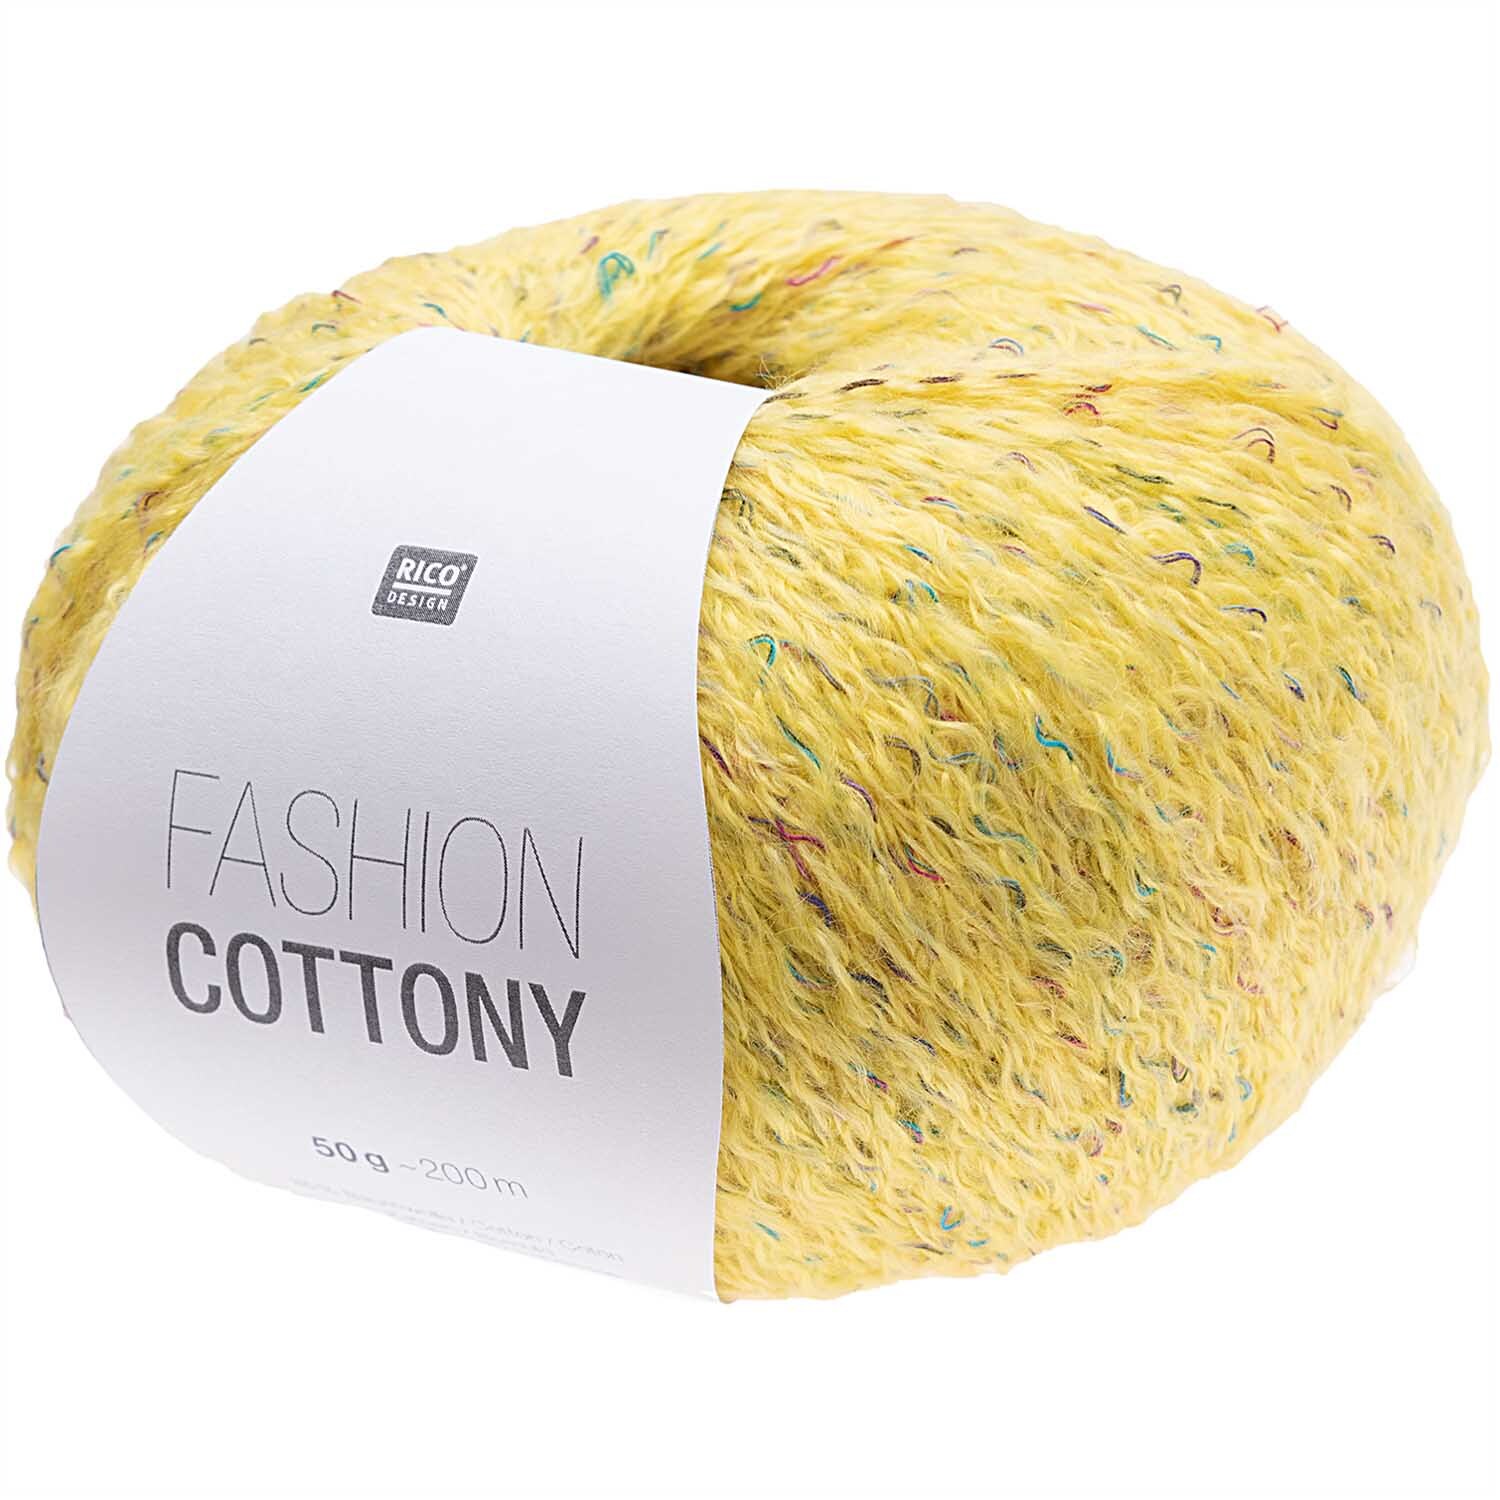 Fashion Cottony